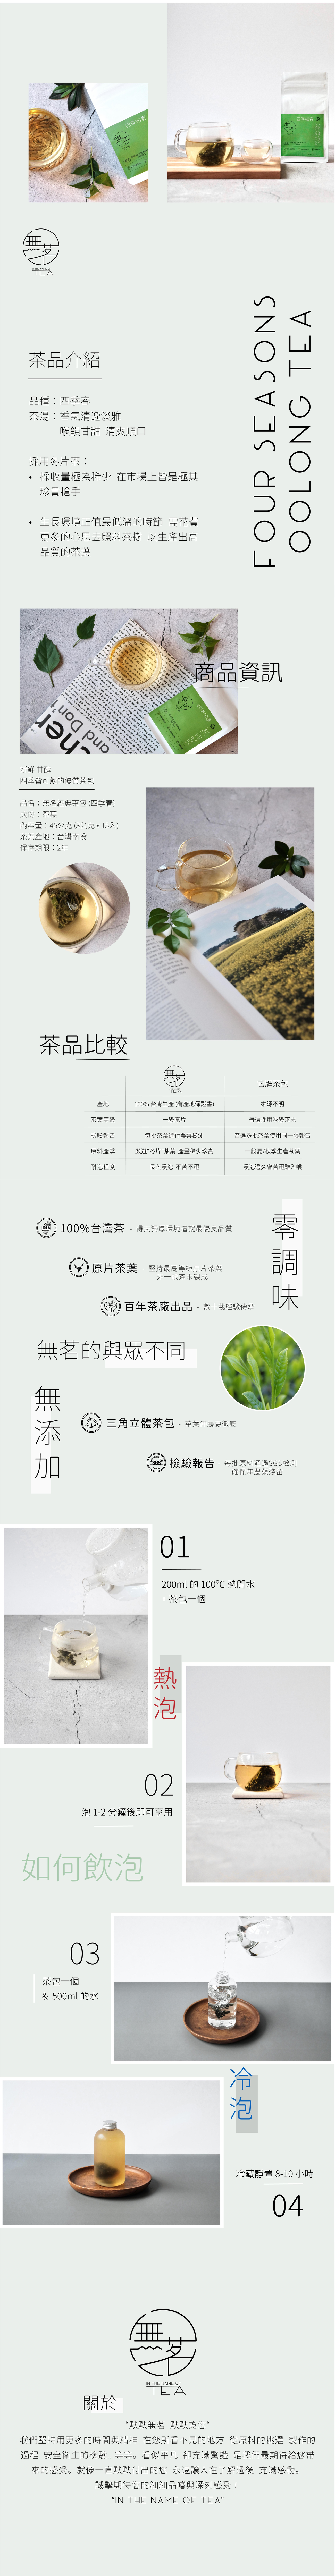 四季春 Website Tea Bag Description.jpg